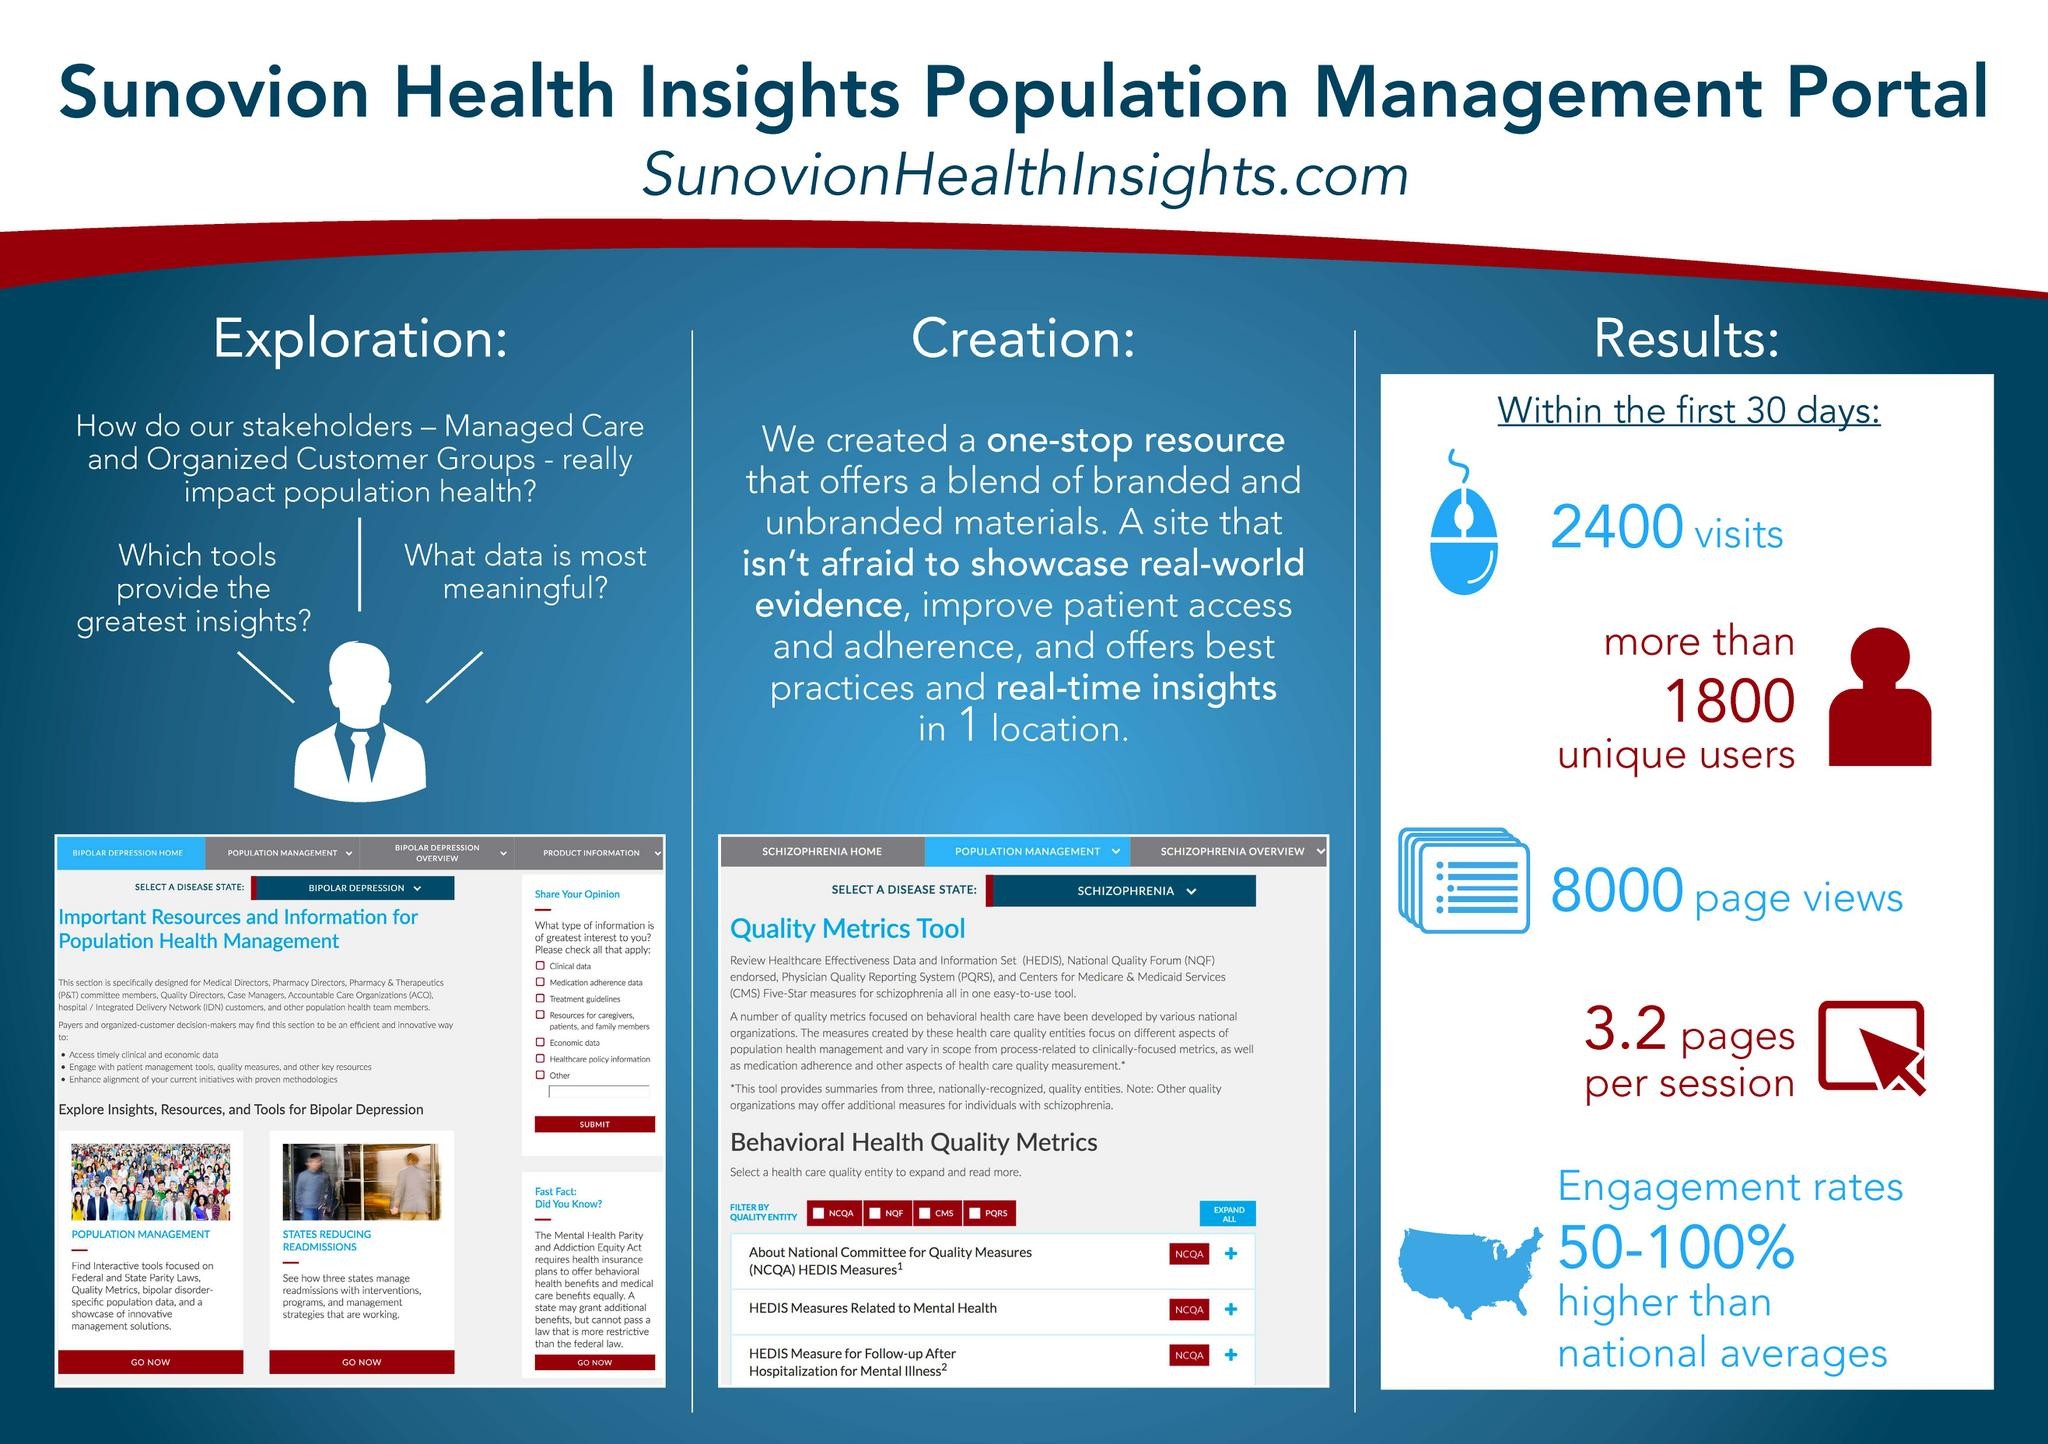 Sunovion Health Insights: Population Health Management Portal